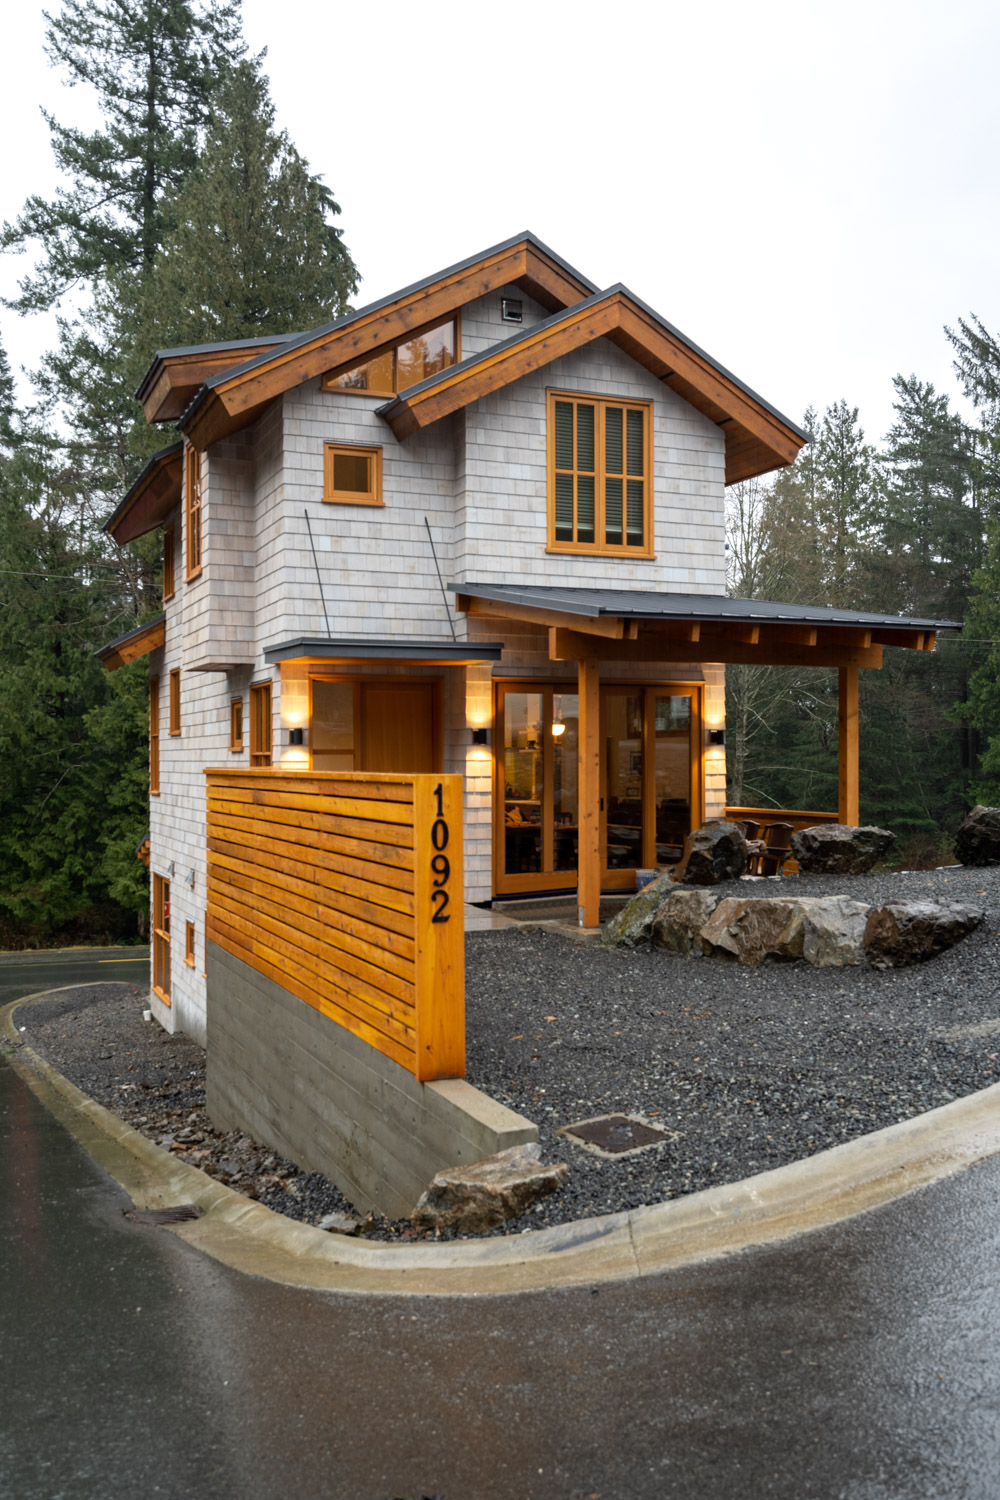 full custom home renovation project - bowen island BC Canada